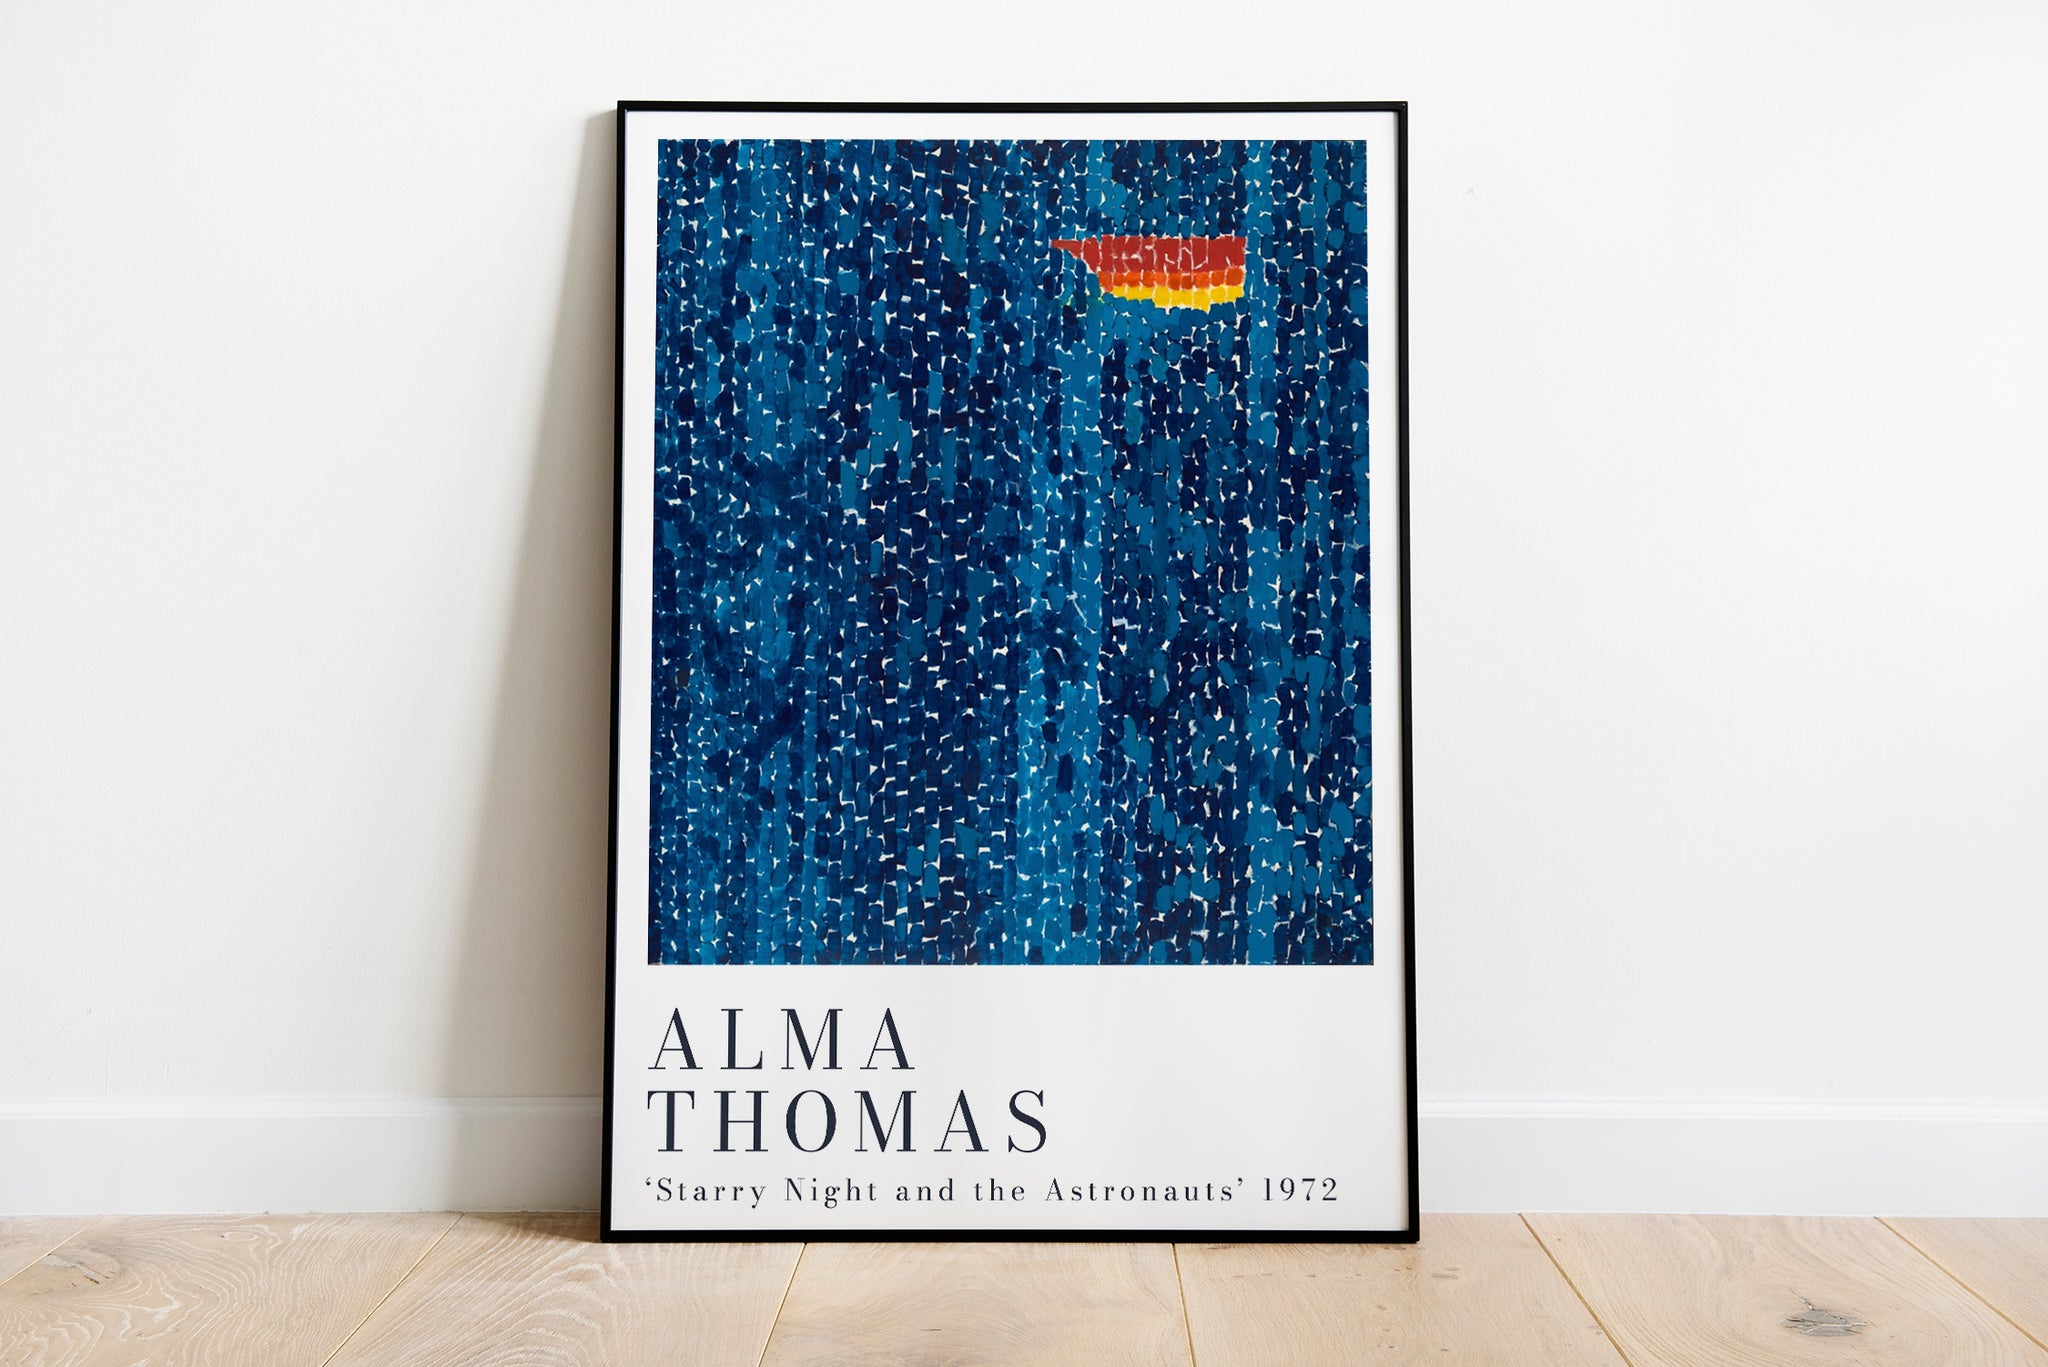 Alma Thomas "Starry Night And The Astronauts" 1972, Alma Thomas Artwork, Alma Thomas Poster, Alma Thomas Art Print - Art For The Home, Artwork, Alma Thomas UK, Alma Thomas "Starry Night And The Astronauts" Print, "Starry Night And The Astronauts" Poster